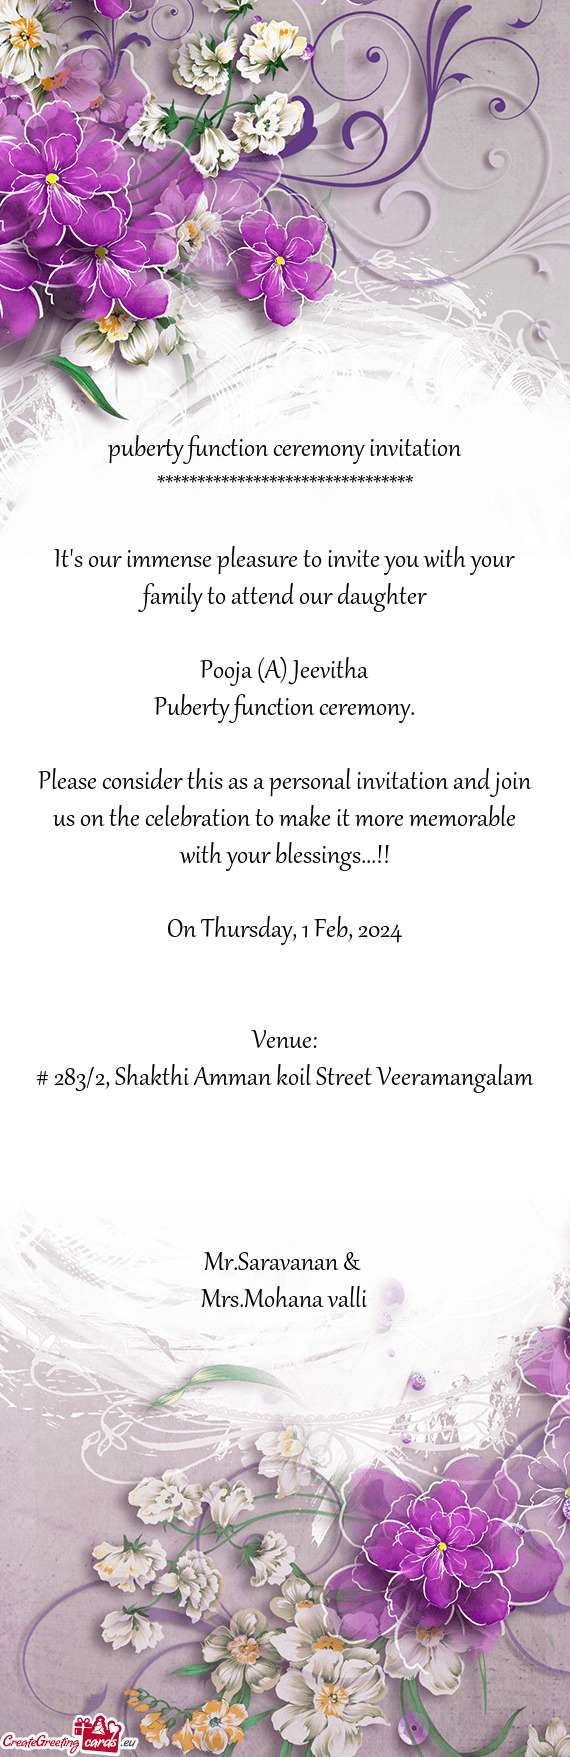 Puberty function ceremony invitation